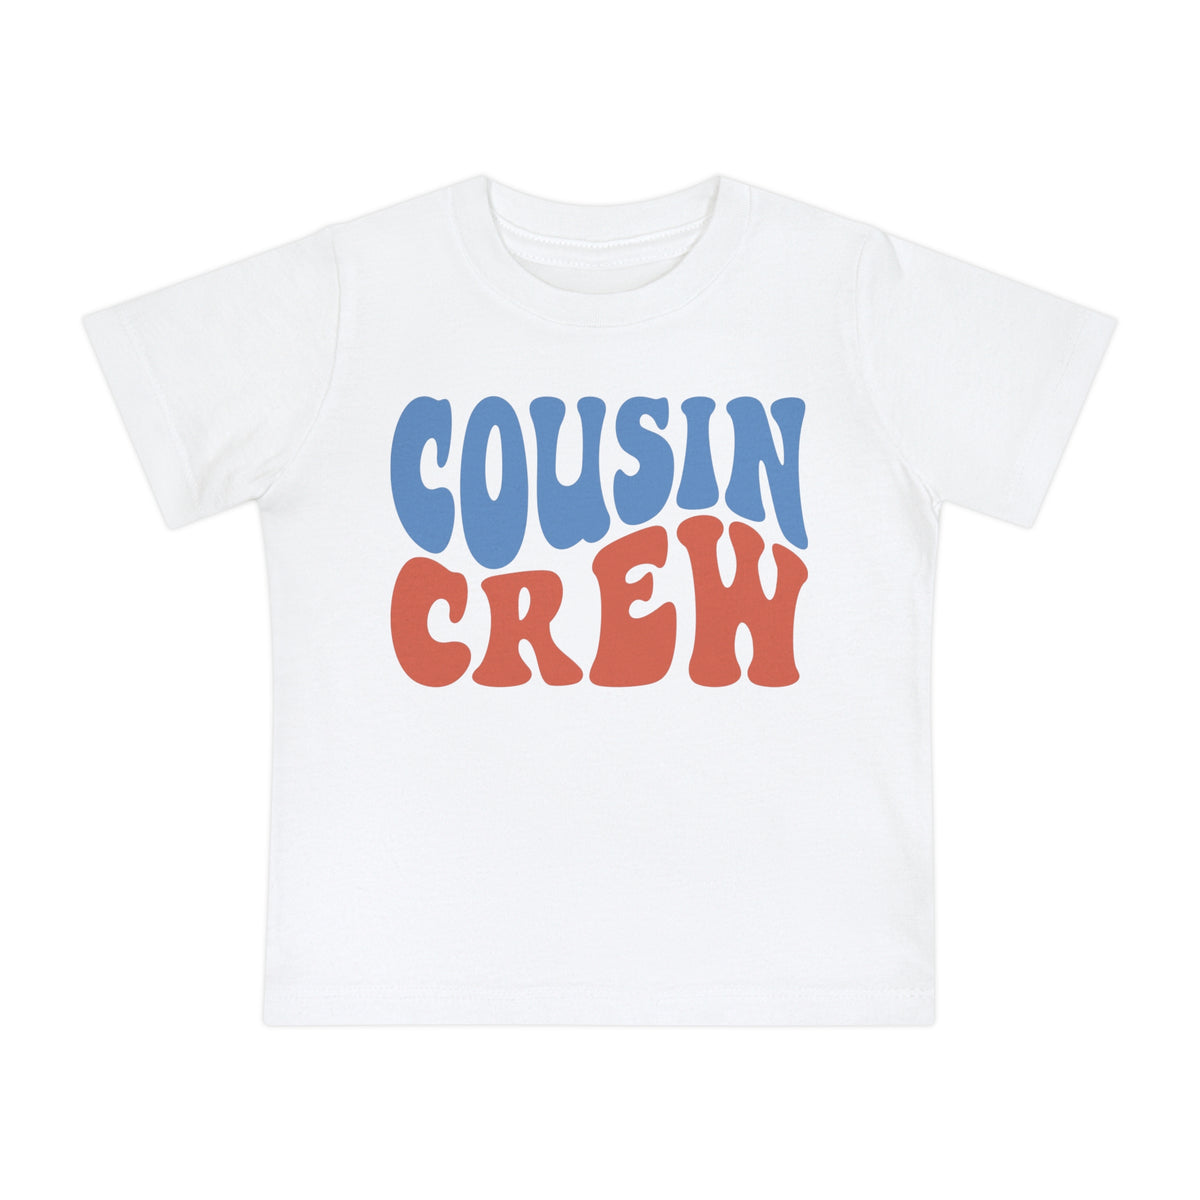 Cousin Crew Bella Canvas Baby Short Sleeve T-Shirt